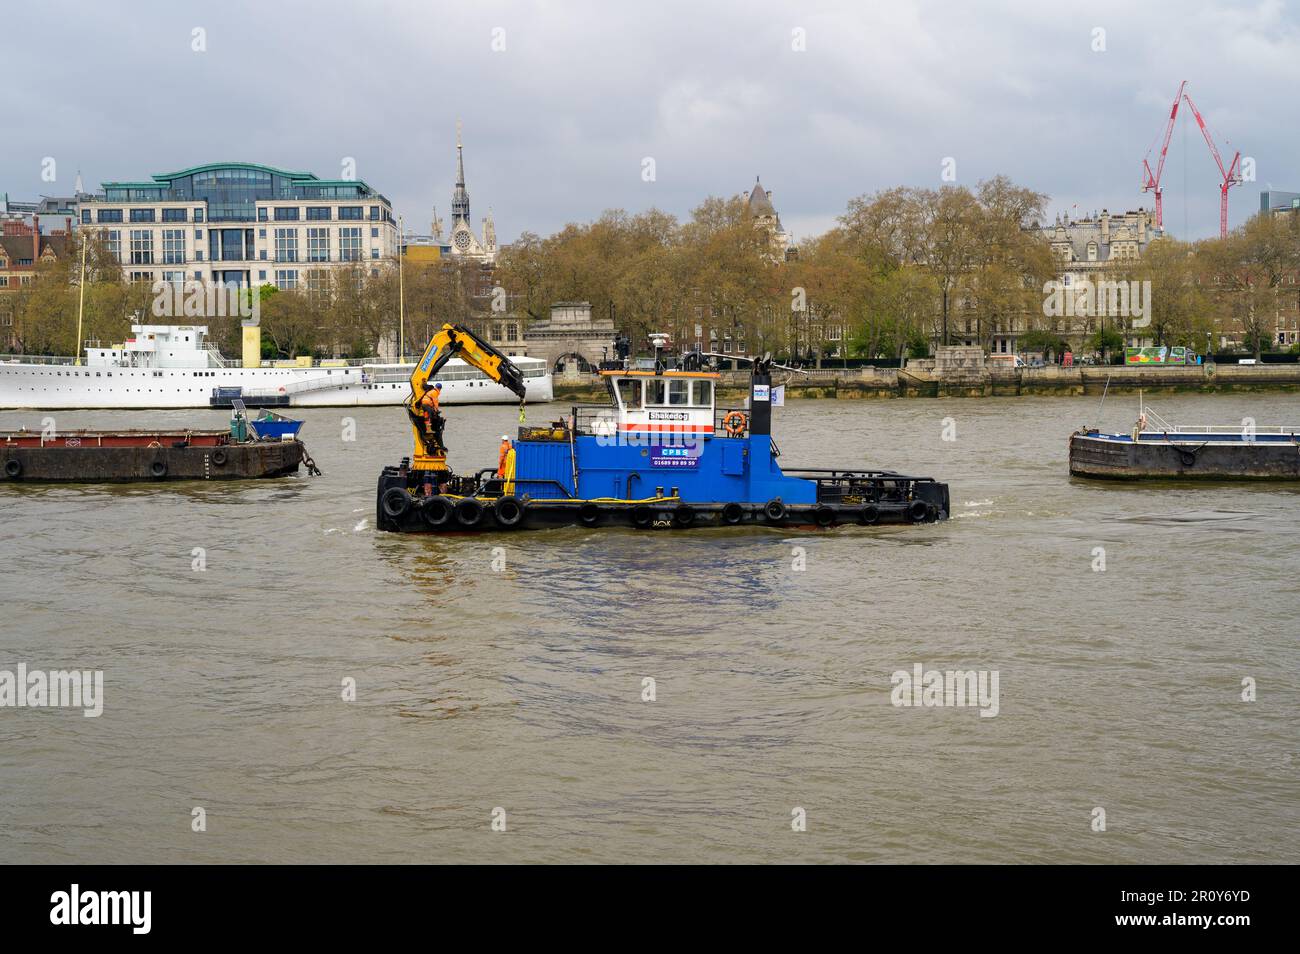 LONDON - April 21, 2023: Spot the M.P.V. Shakedog, a multi-cat support vessel, on the River Thames, contributing to the bustling maritime transportati Stock Photo